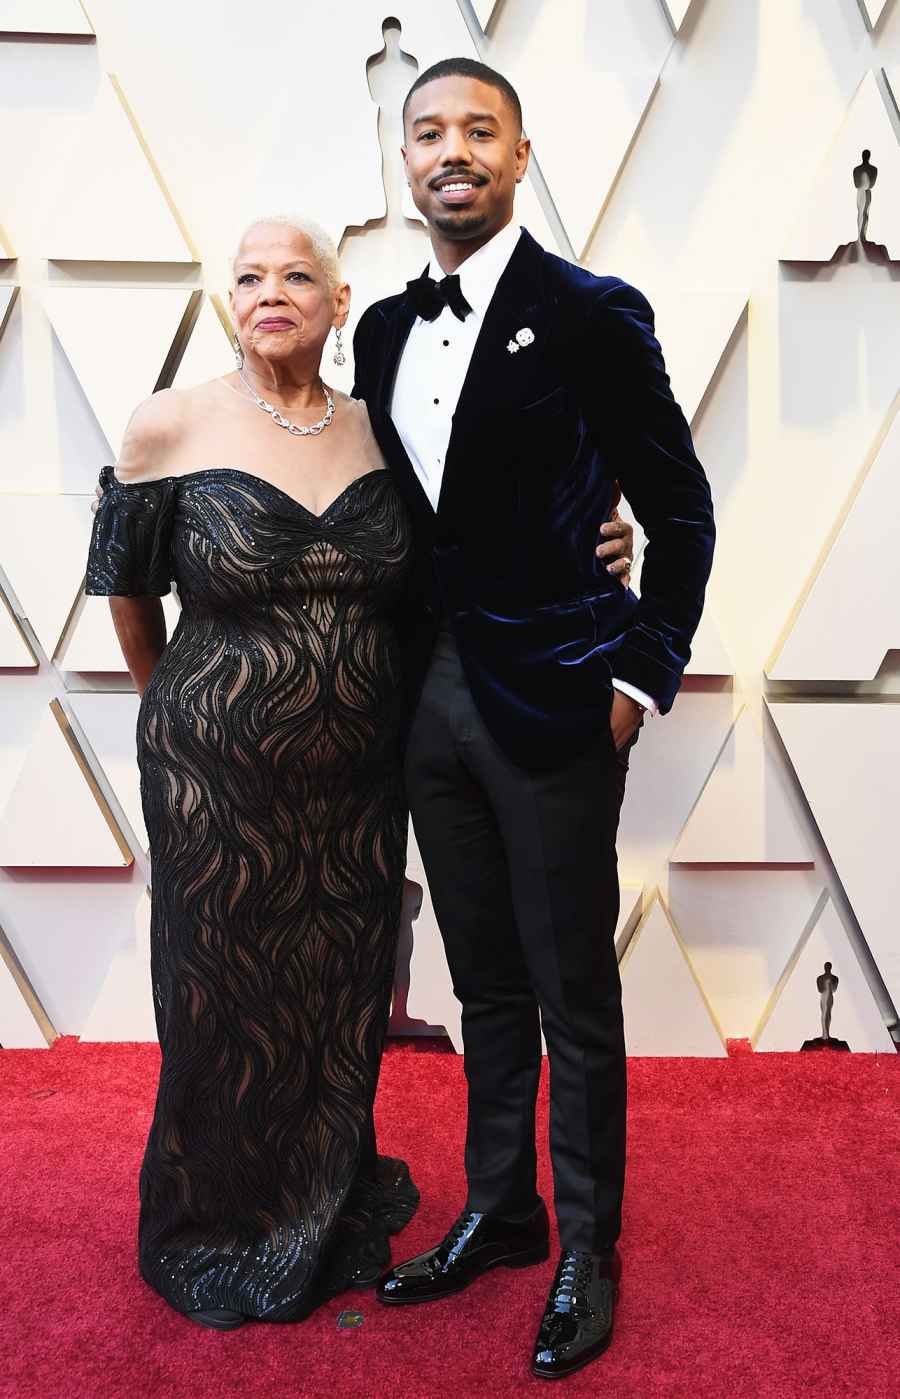 Michael B Jordan Hottest Hunks at the 2019 Oscars